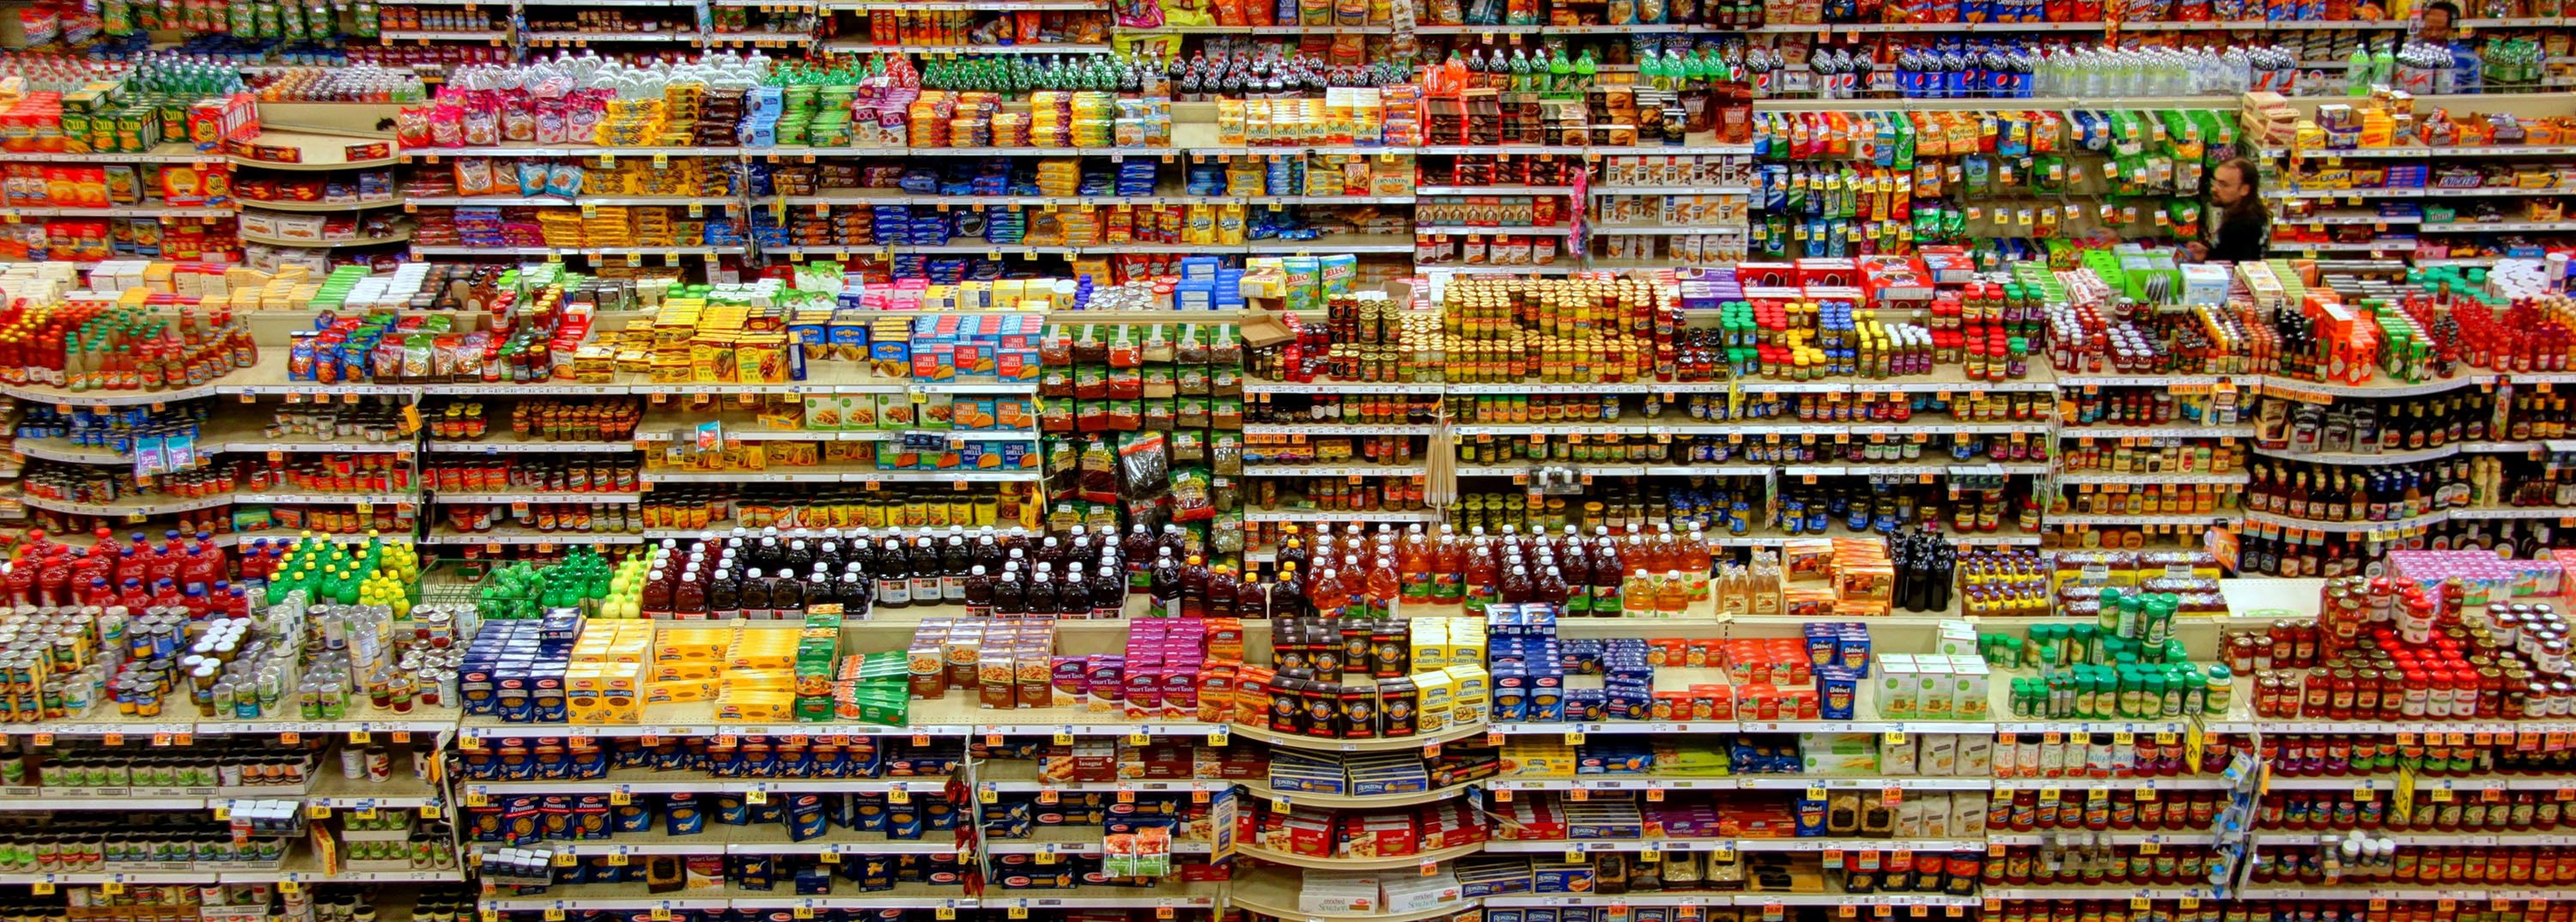 A Grocery store. Photo: Peter Bond on Unsplash.com